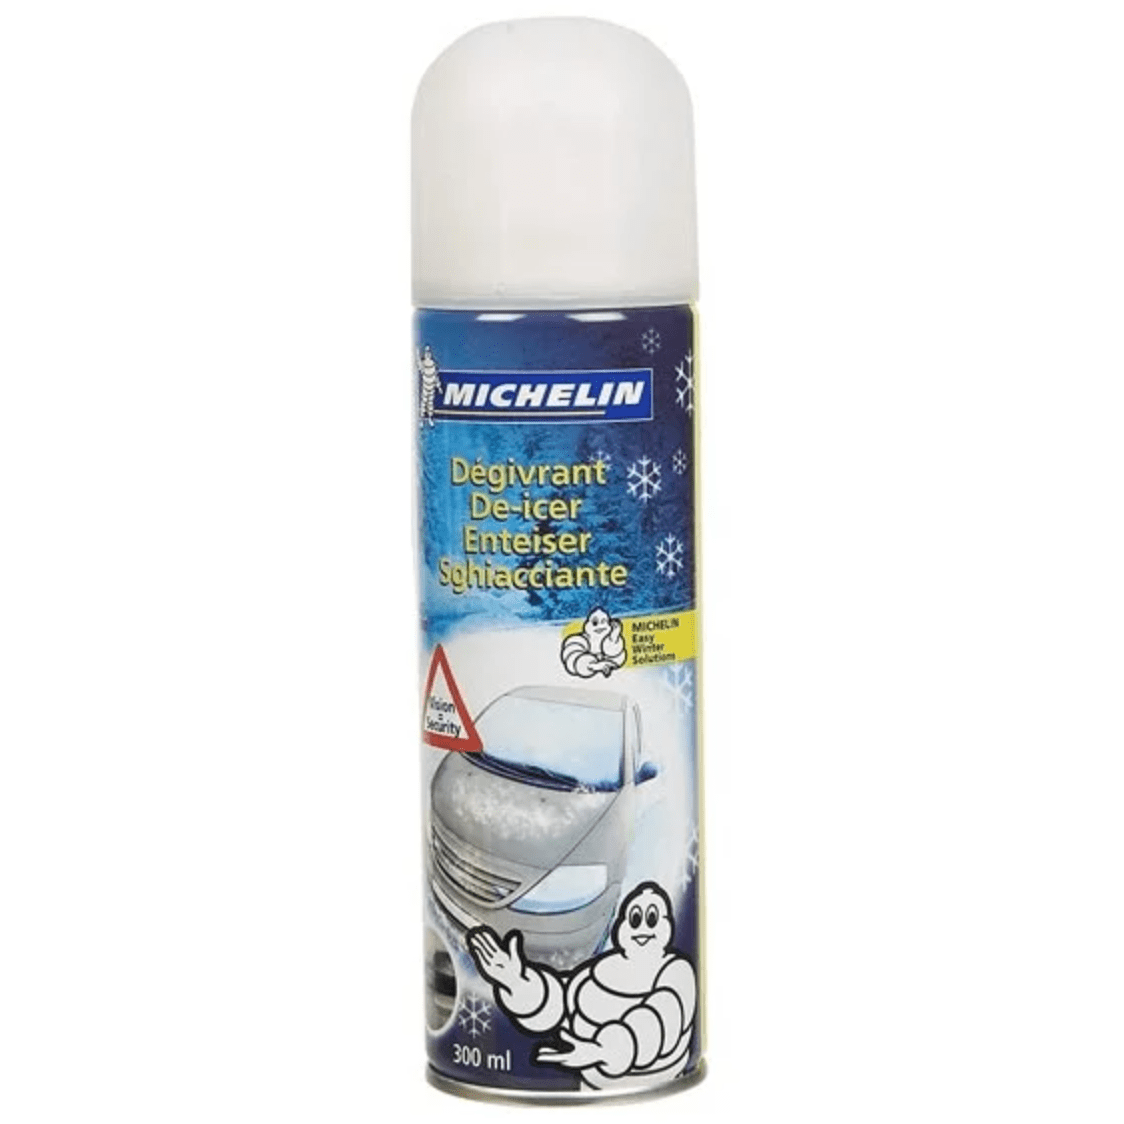 Dégivrant Aérosol Michelin - 300 ml - Bâtiself